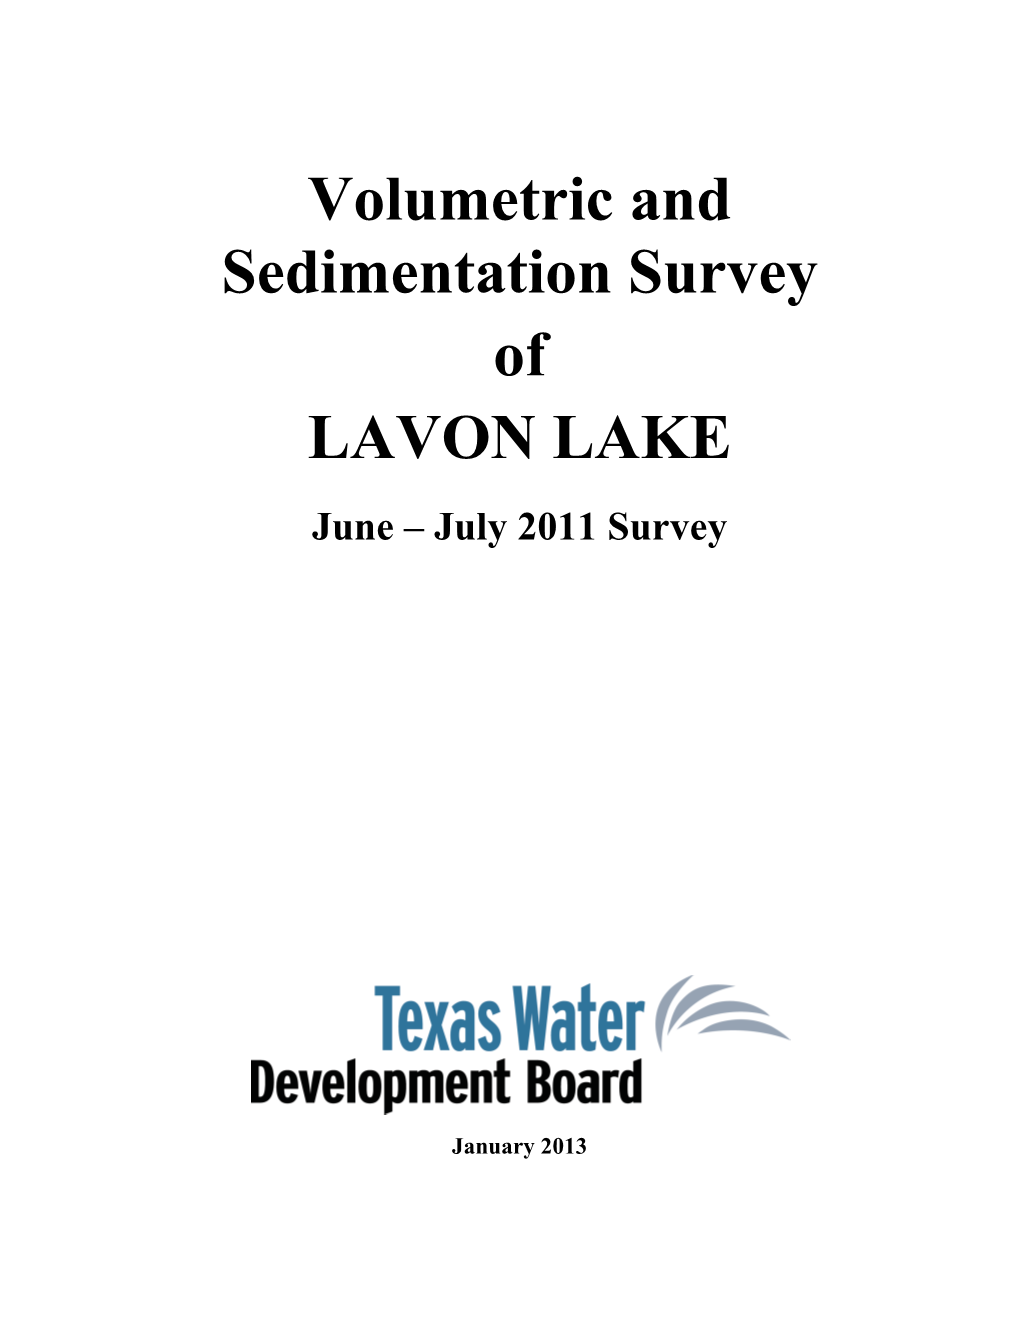 Volumetric and Sedimentation Survey of LAVON LAKE June – July 2011 Survey